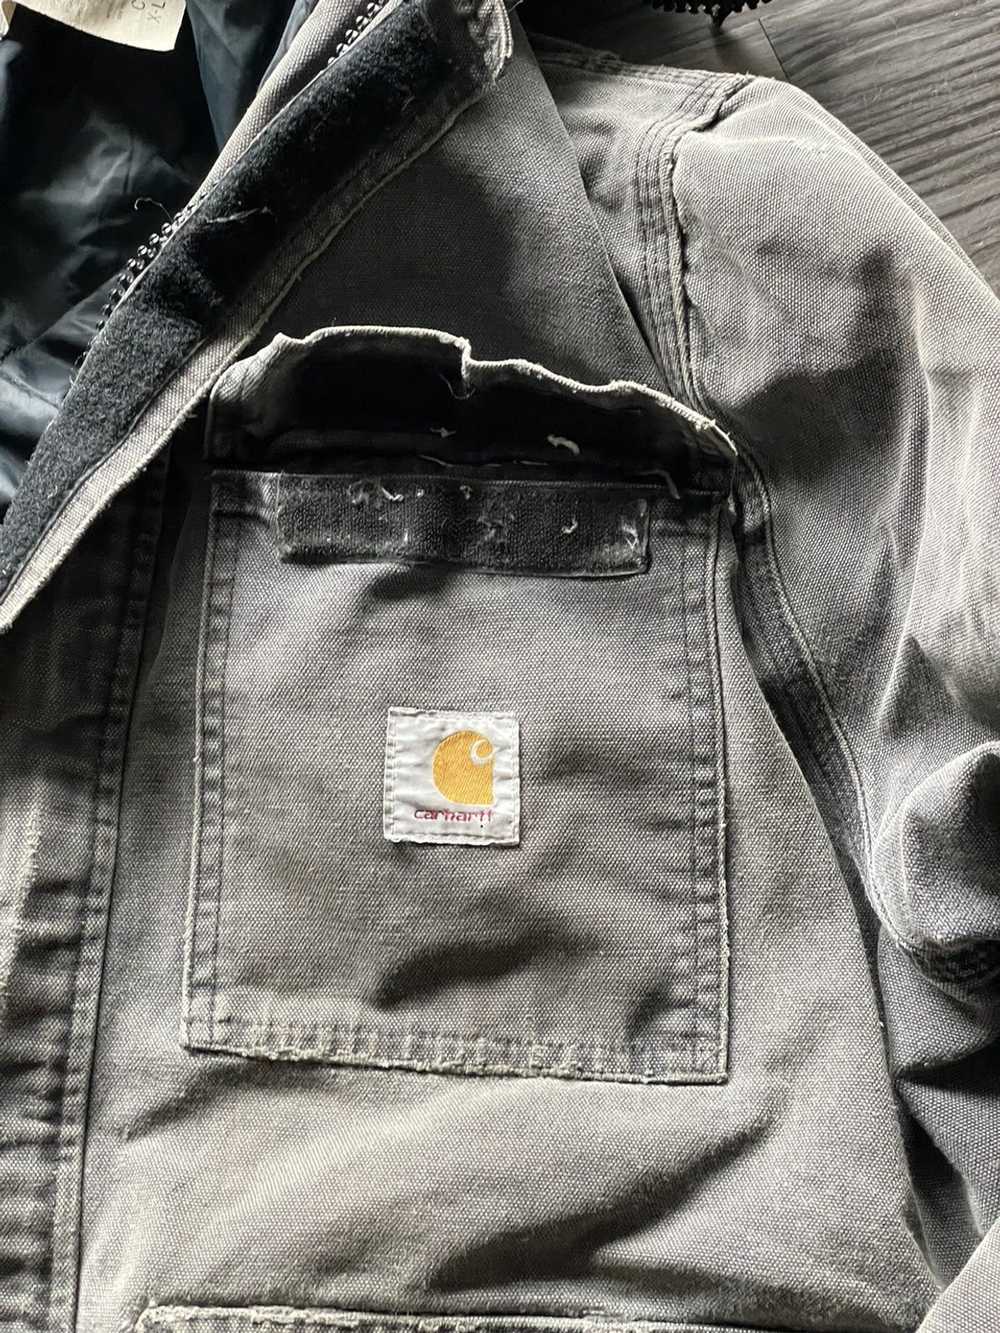 Carhartt Vintage Carhartt trench work jacket - image 2